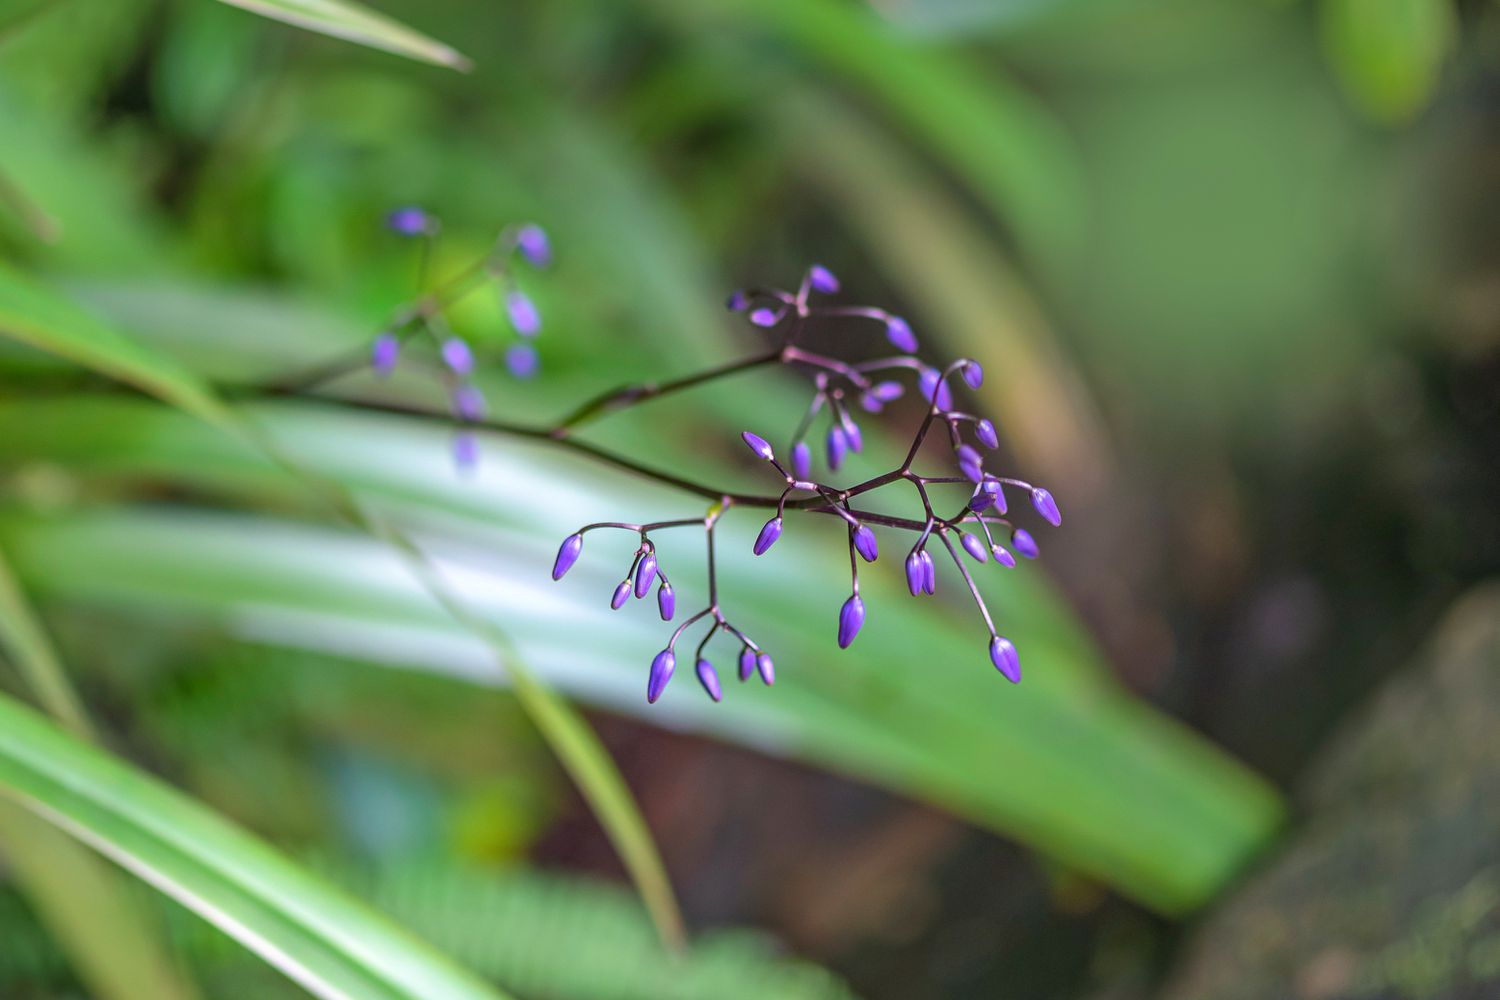 Flachslilienpflanze am dünnen Stängel mit winzigen violetten Rispen am Ende, Nahaufnahme